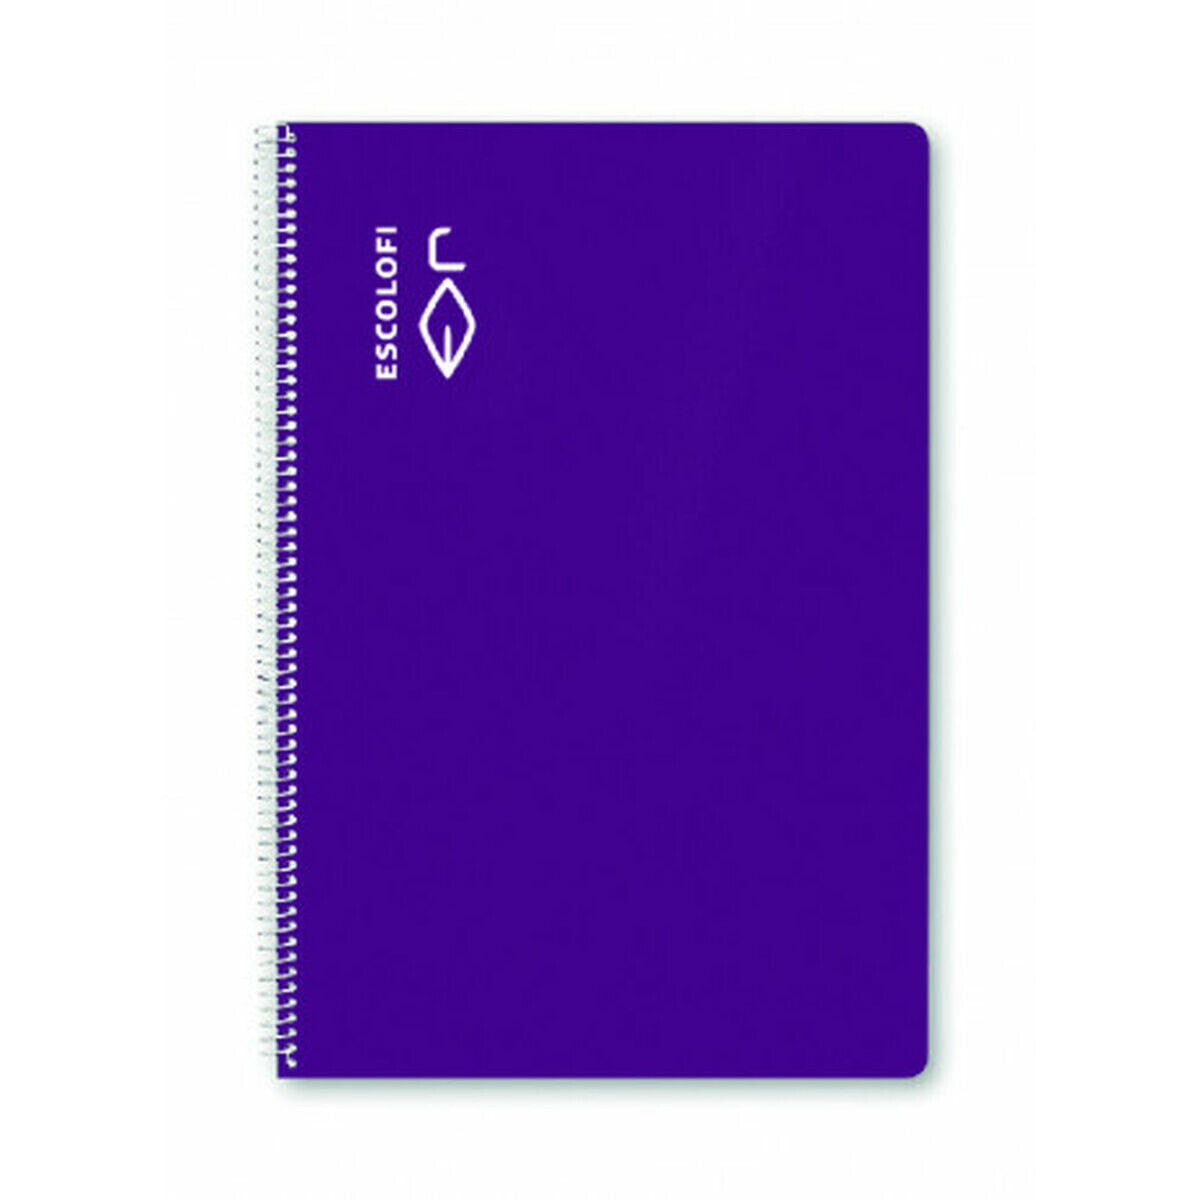 Notebook ESCOLOFI 5 Units Violet Quarto 50 Sheets